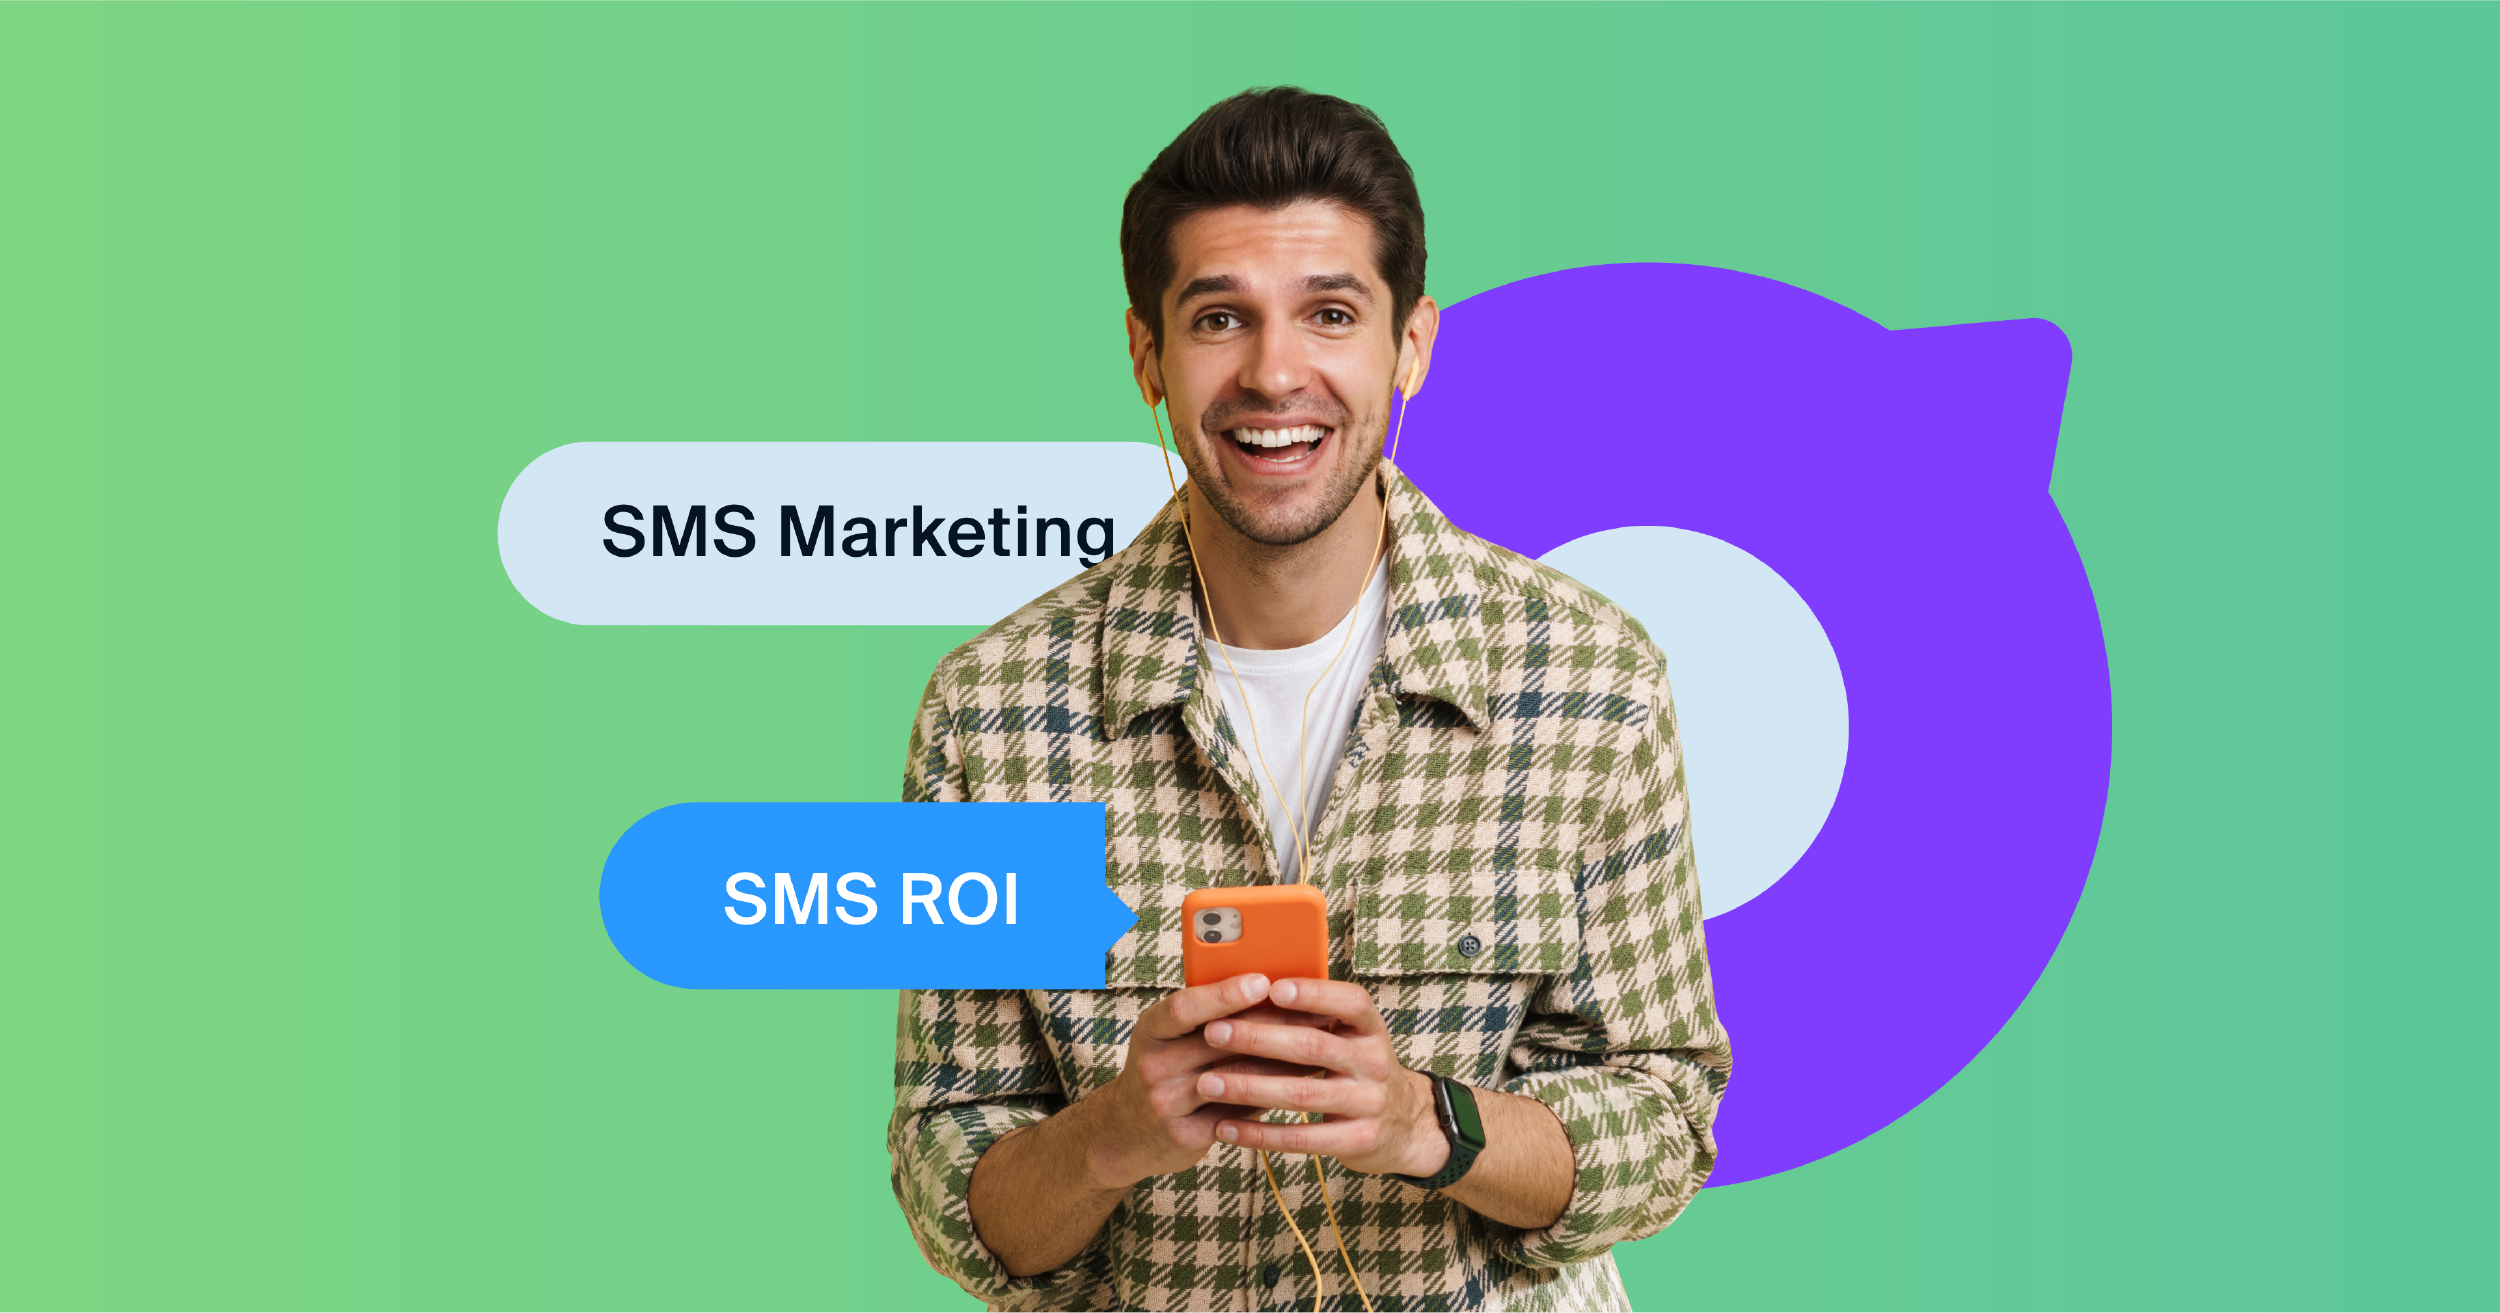 SMS Marketing ROI